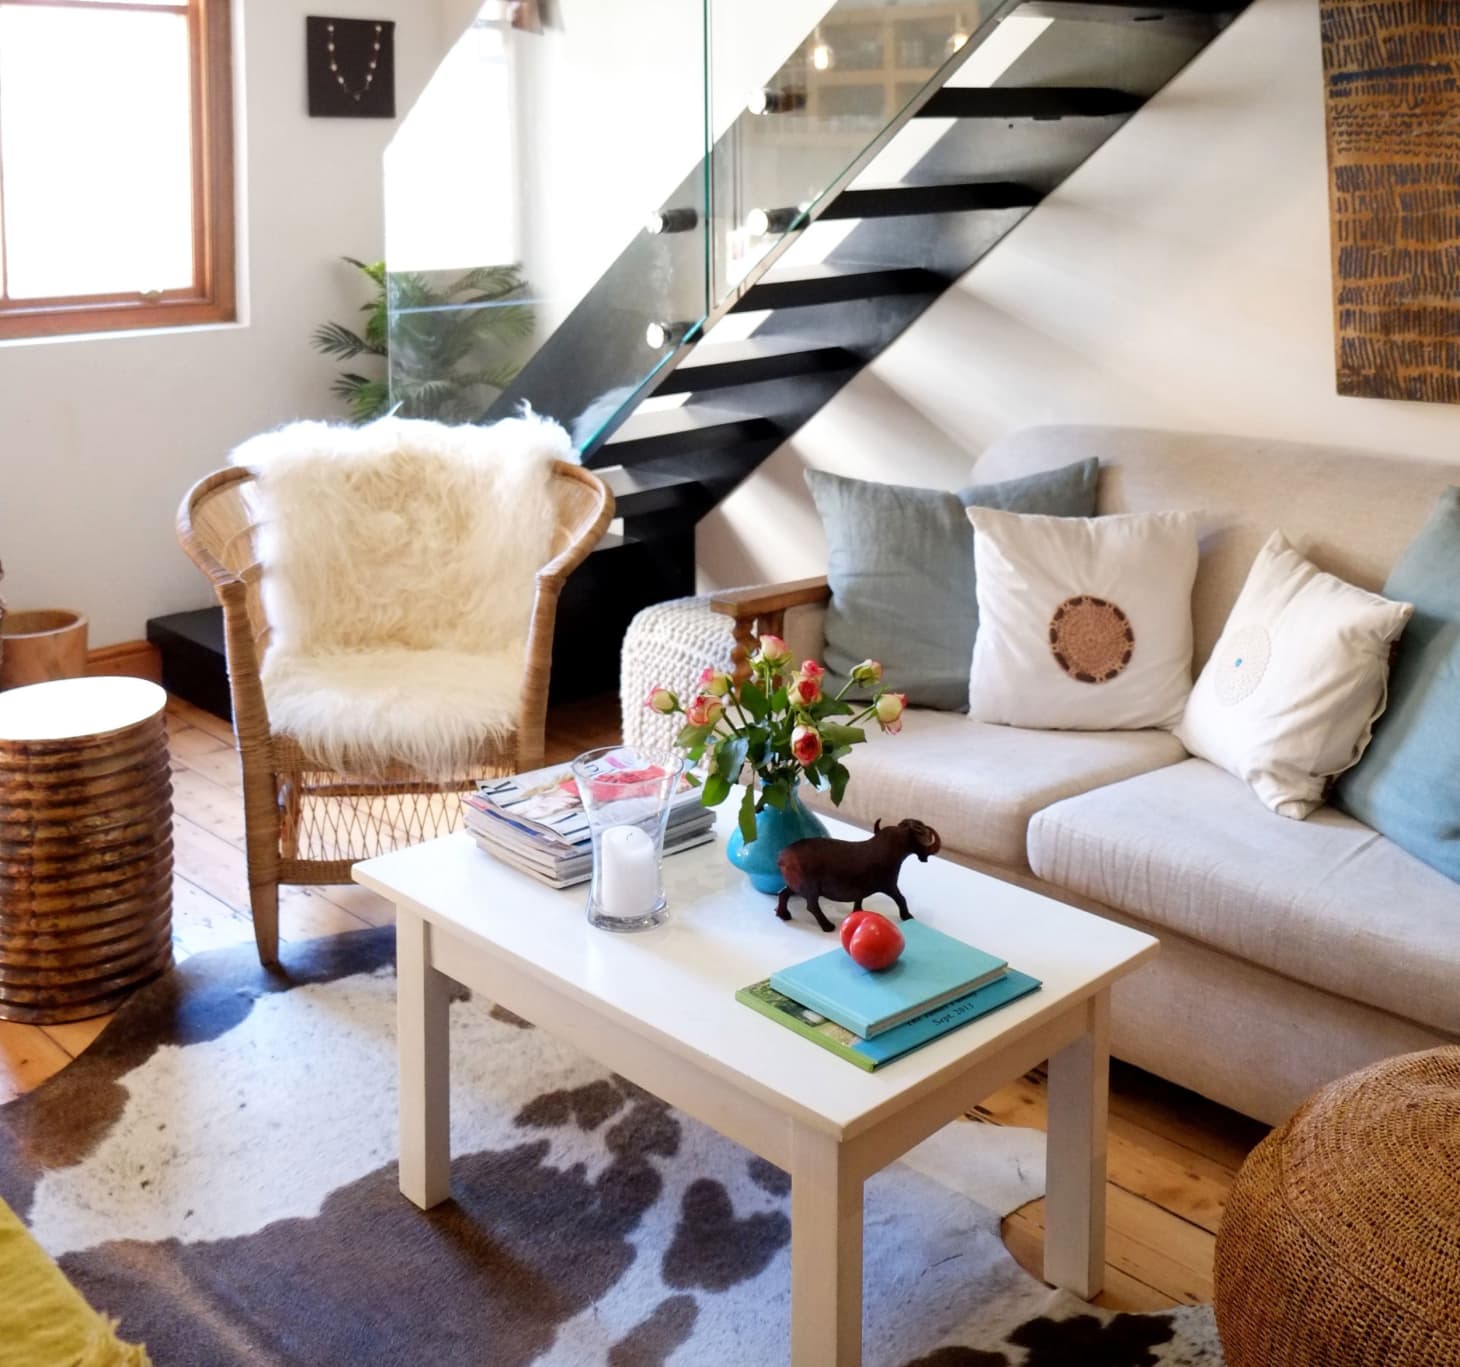 Interior Design Ideas For Small Living Room